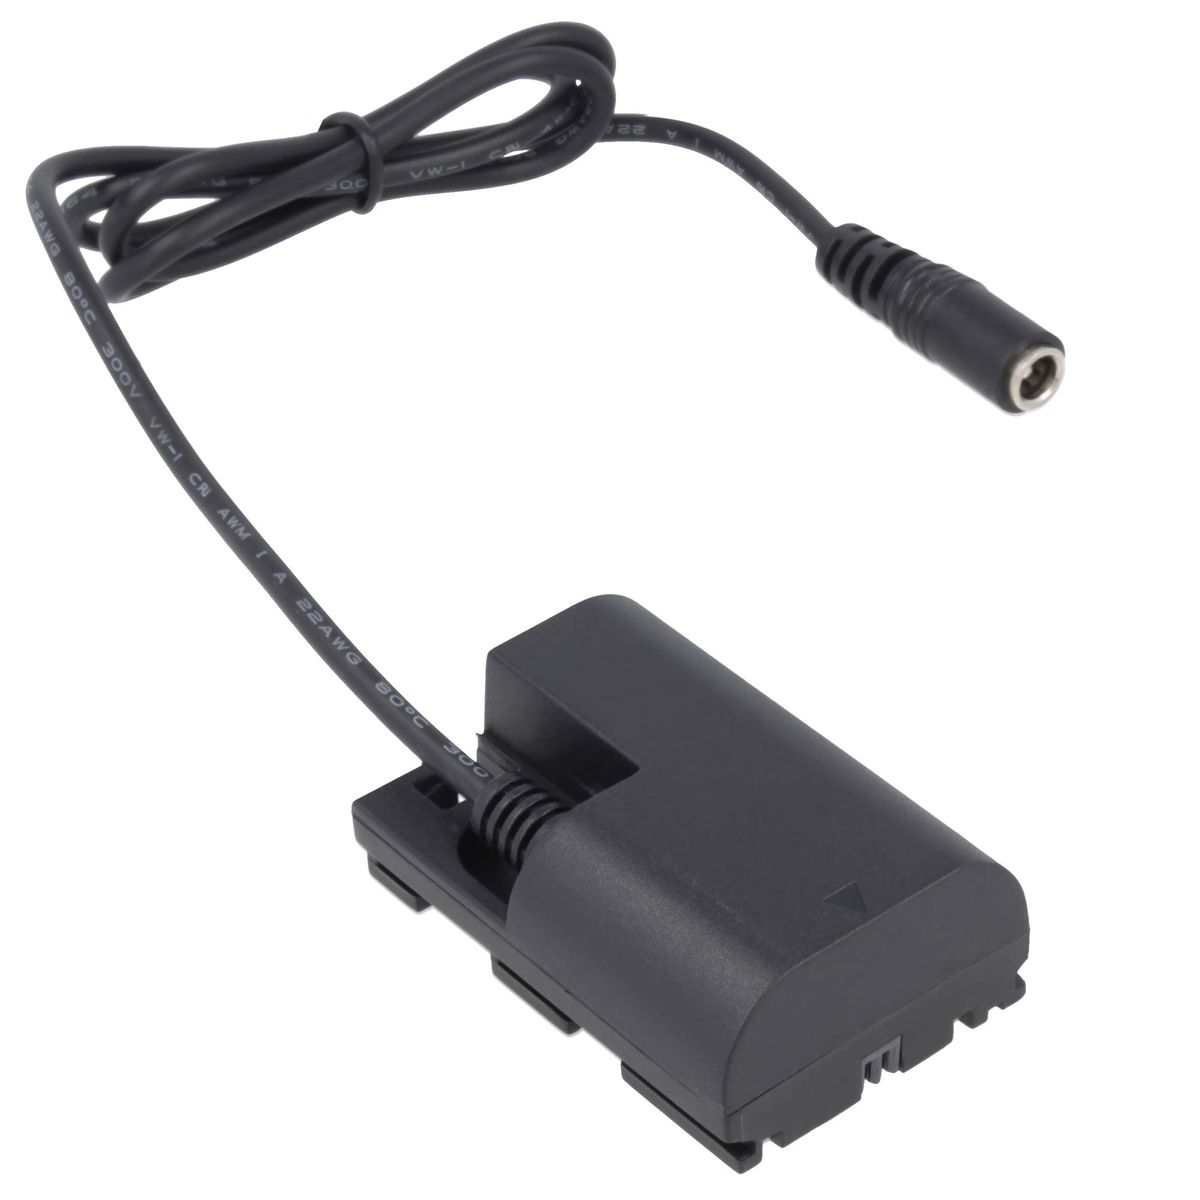 AKKU-KING USB-C Adapter mit DR-E6 Ladegerät keine Canon, Angabe + Kuppler Canon kompatibel